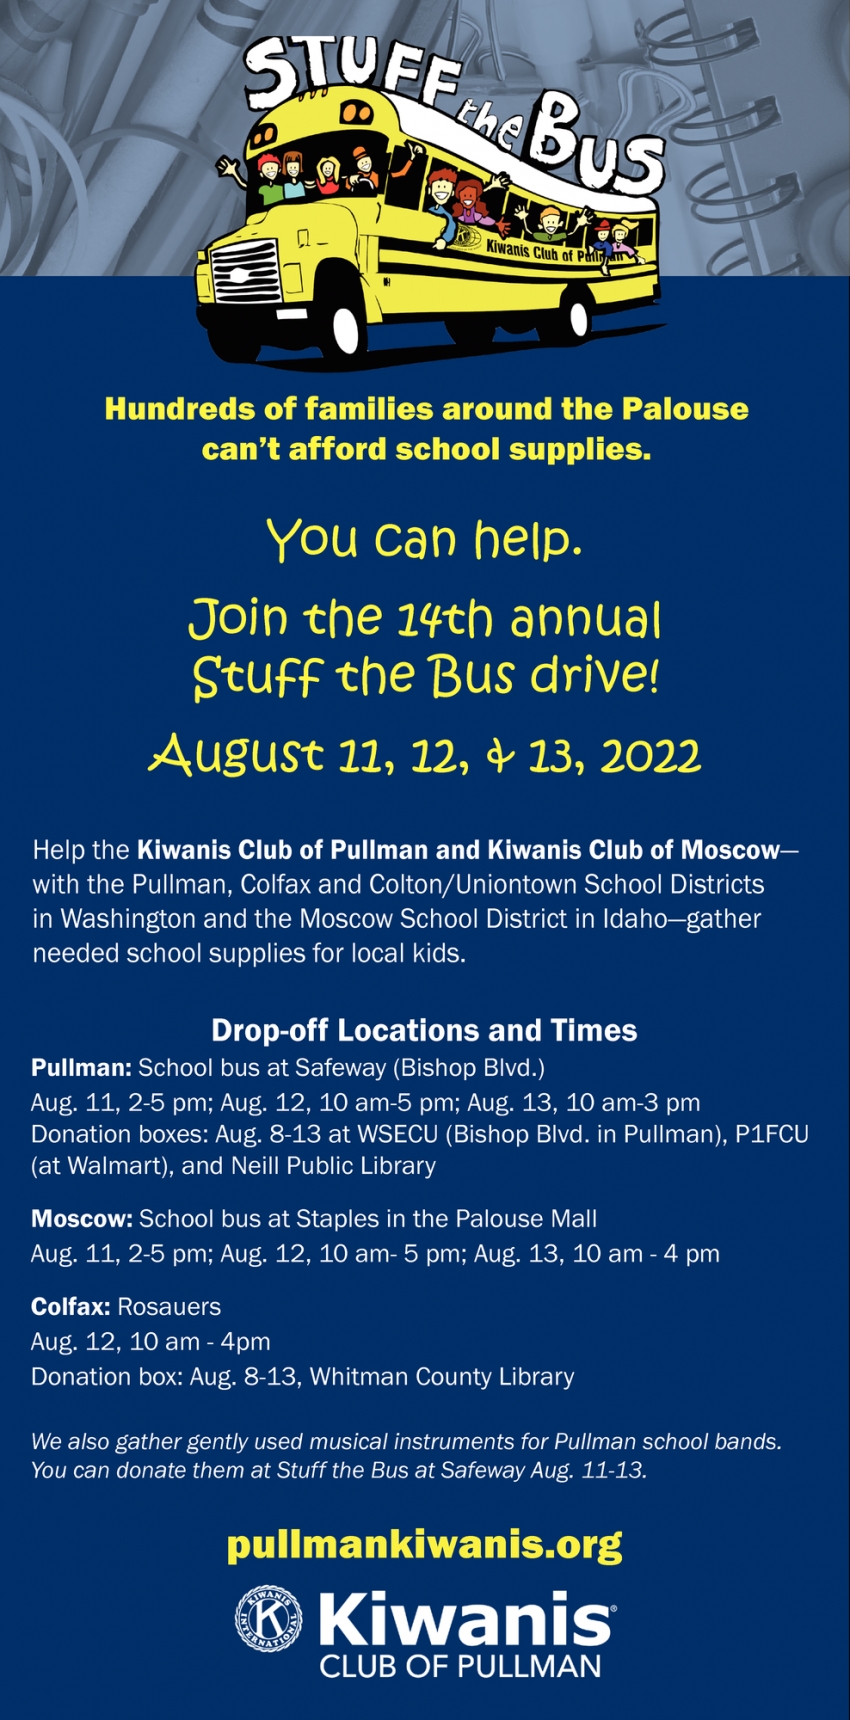 You Can Help, Kiwanis Club of Pullman